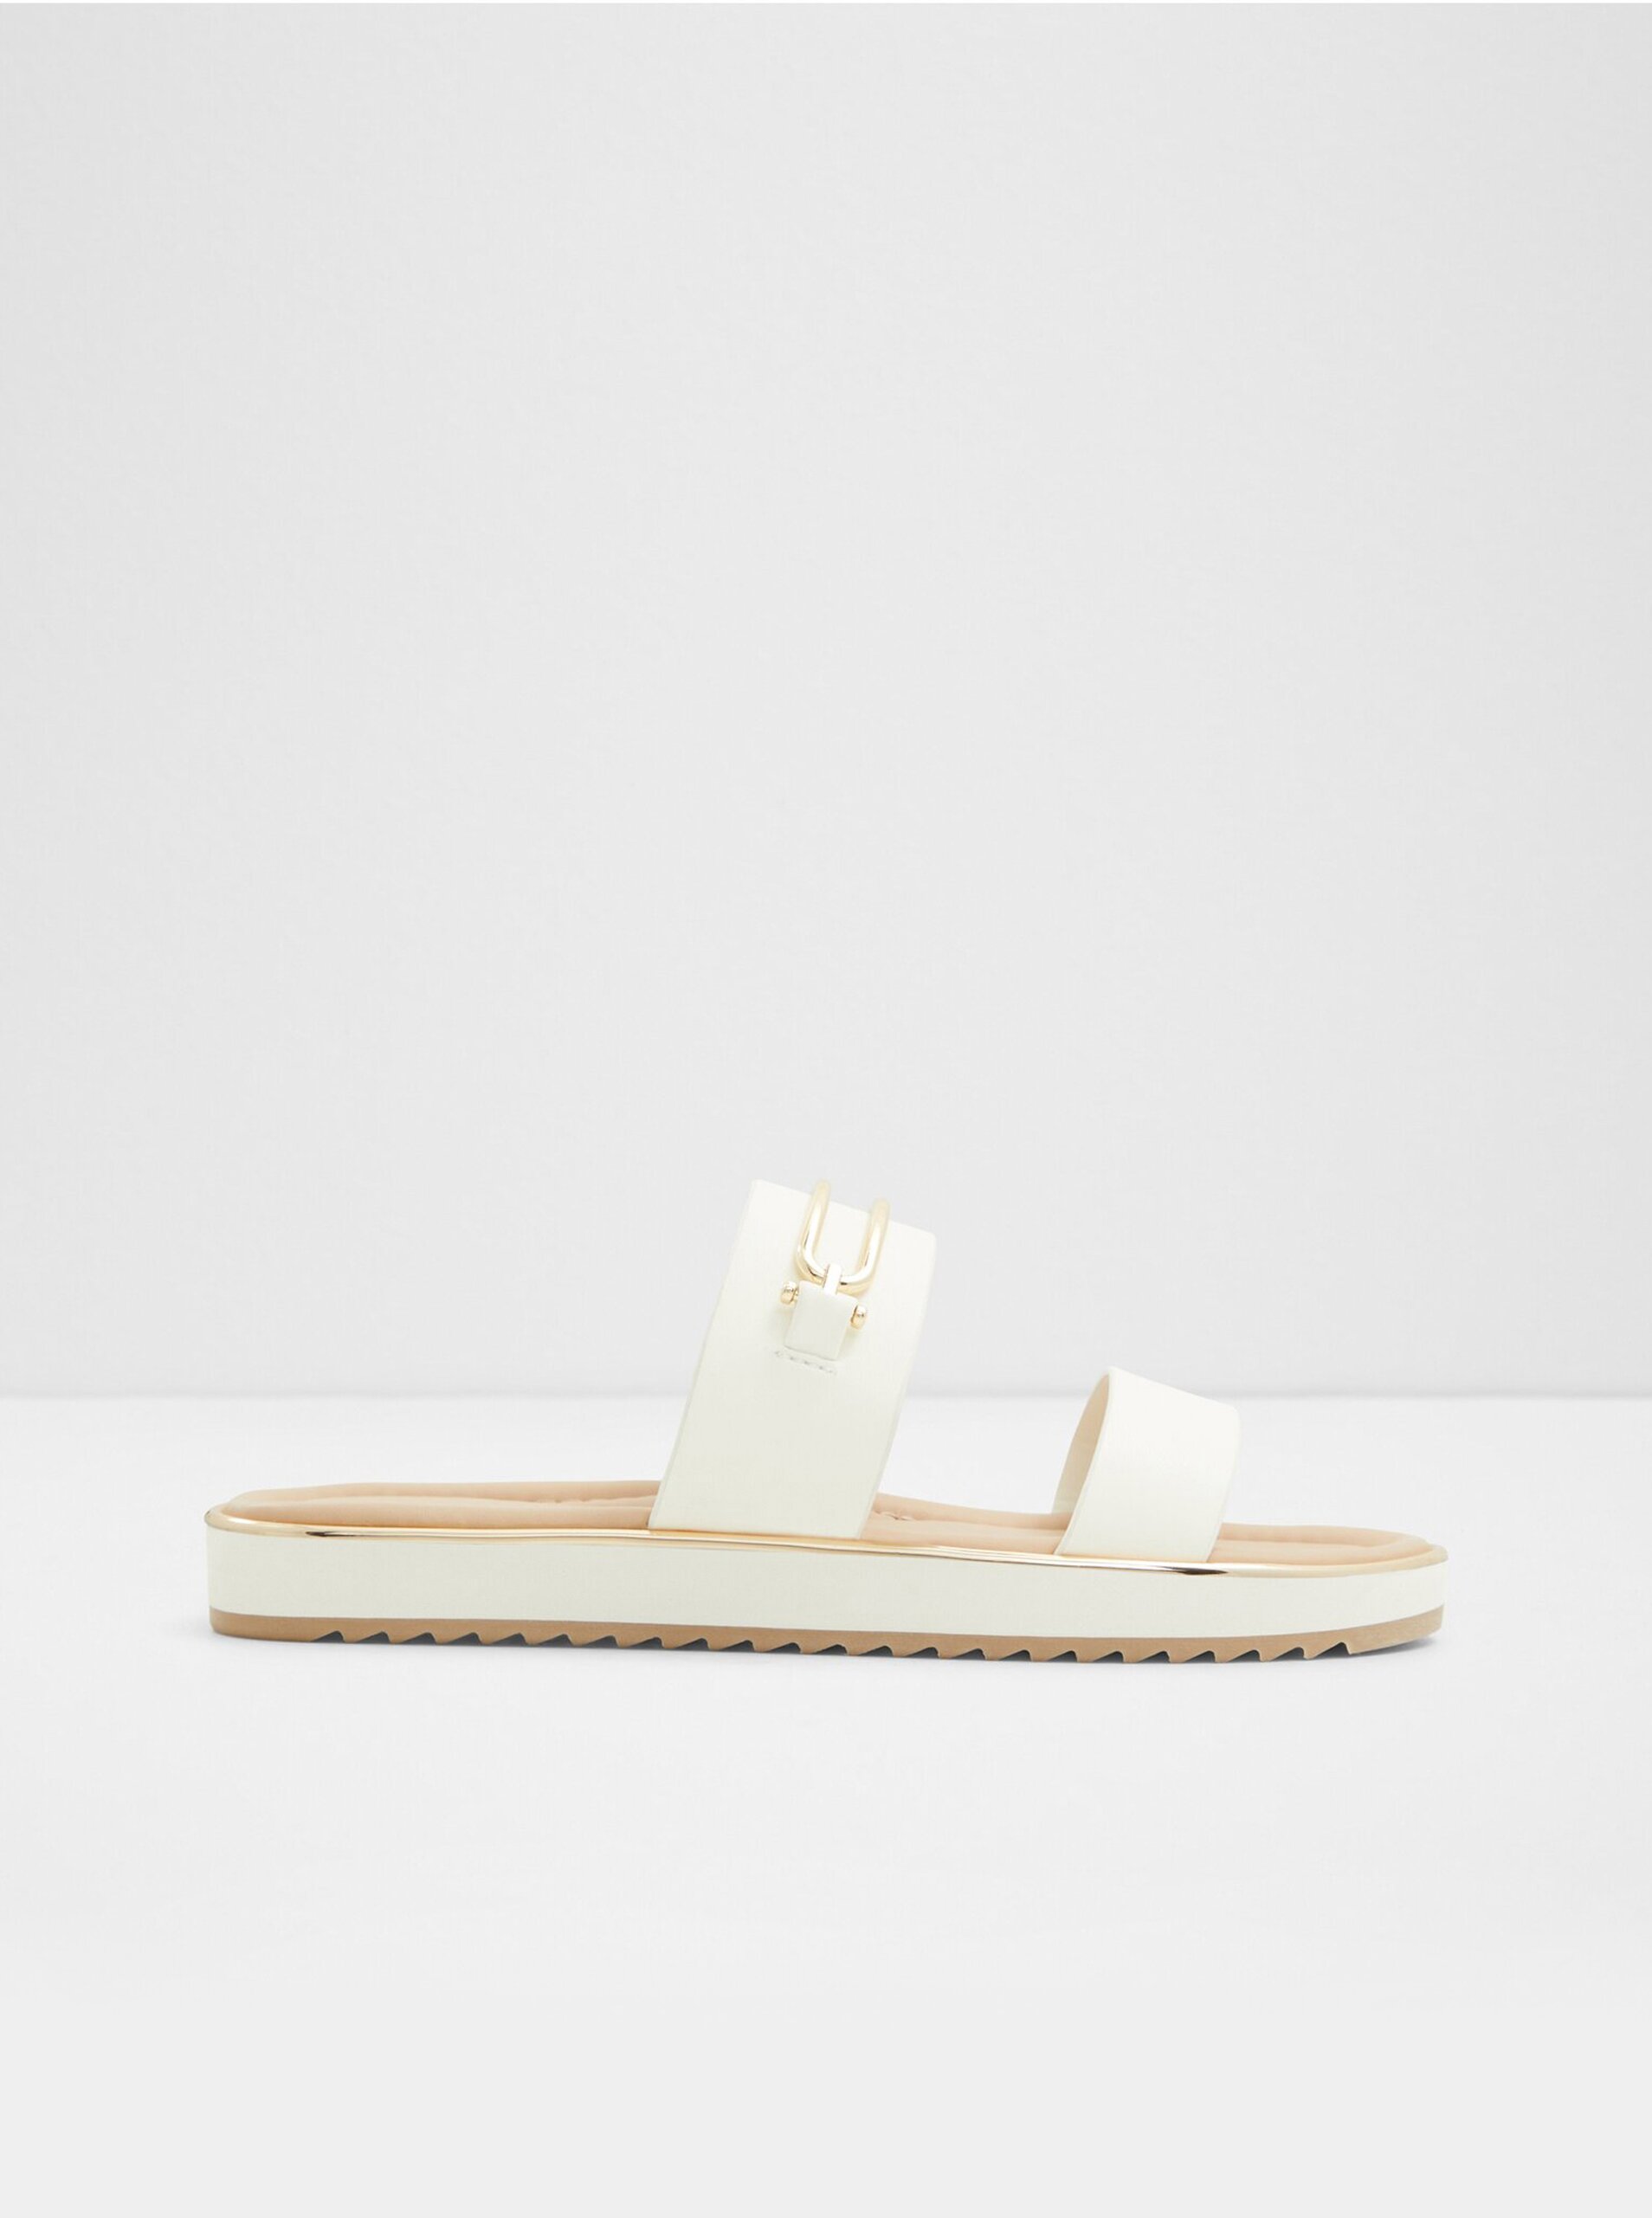 E-shop Bílé dámské pantofle s ozdobným detailem ALDO Lagoon